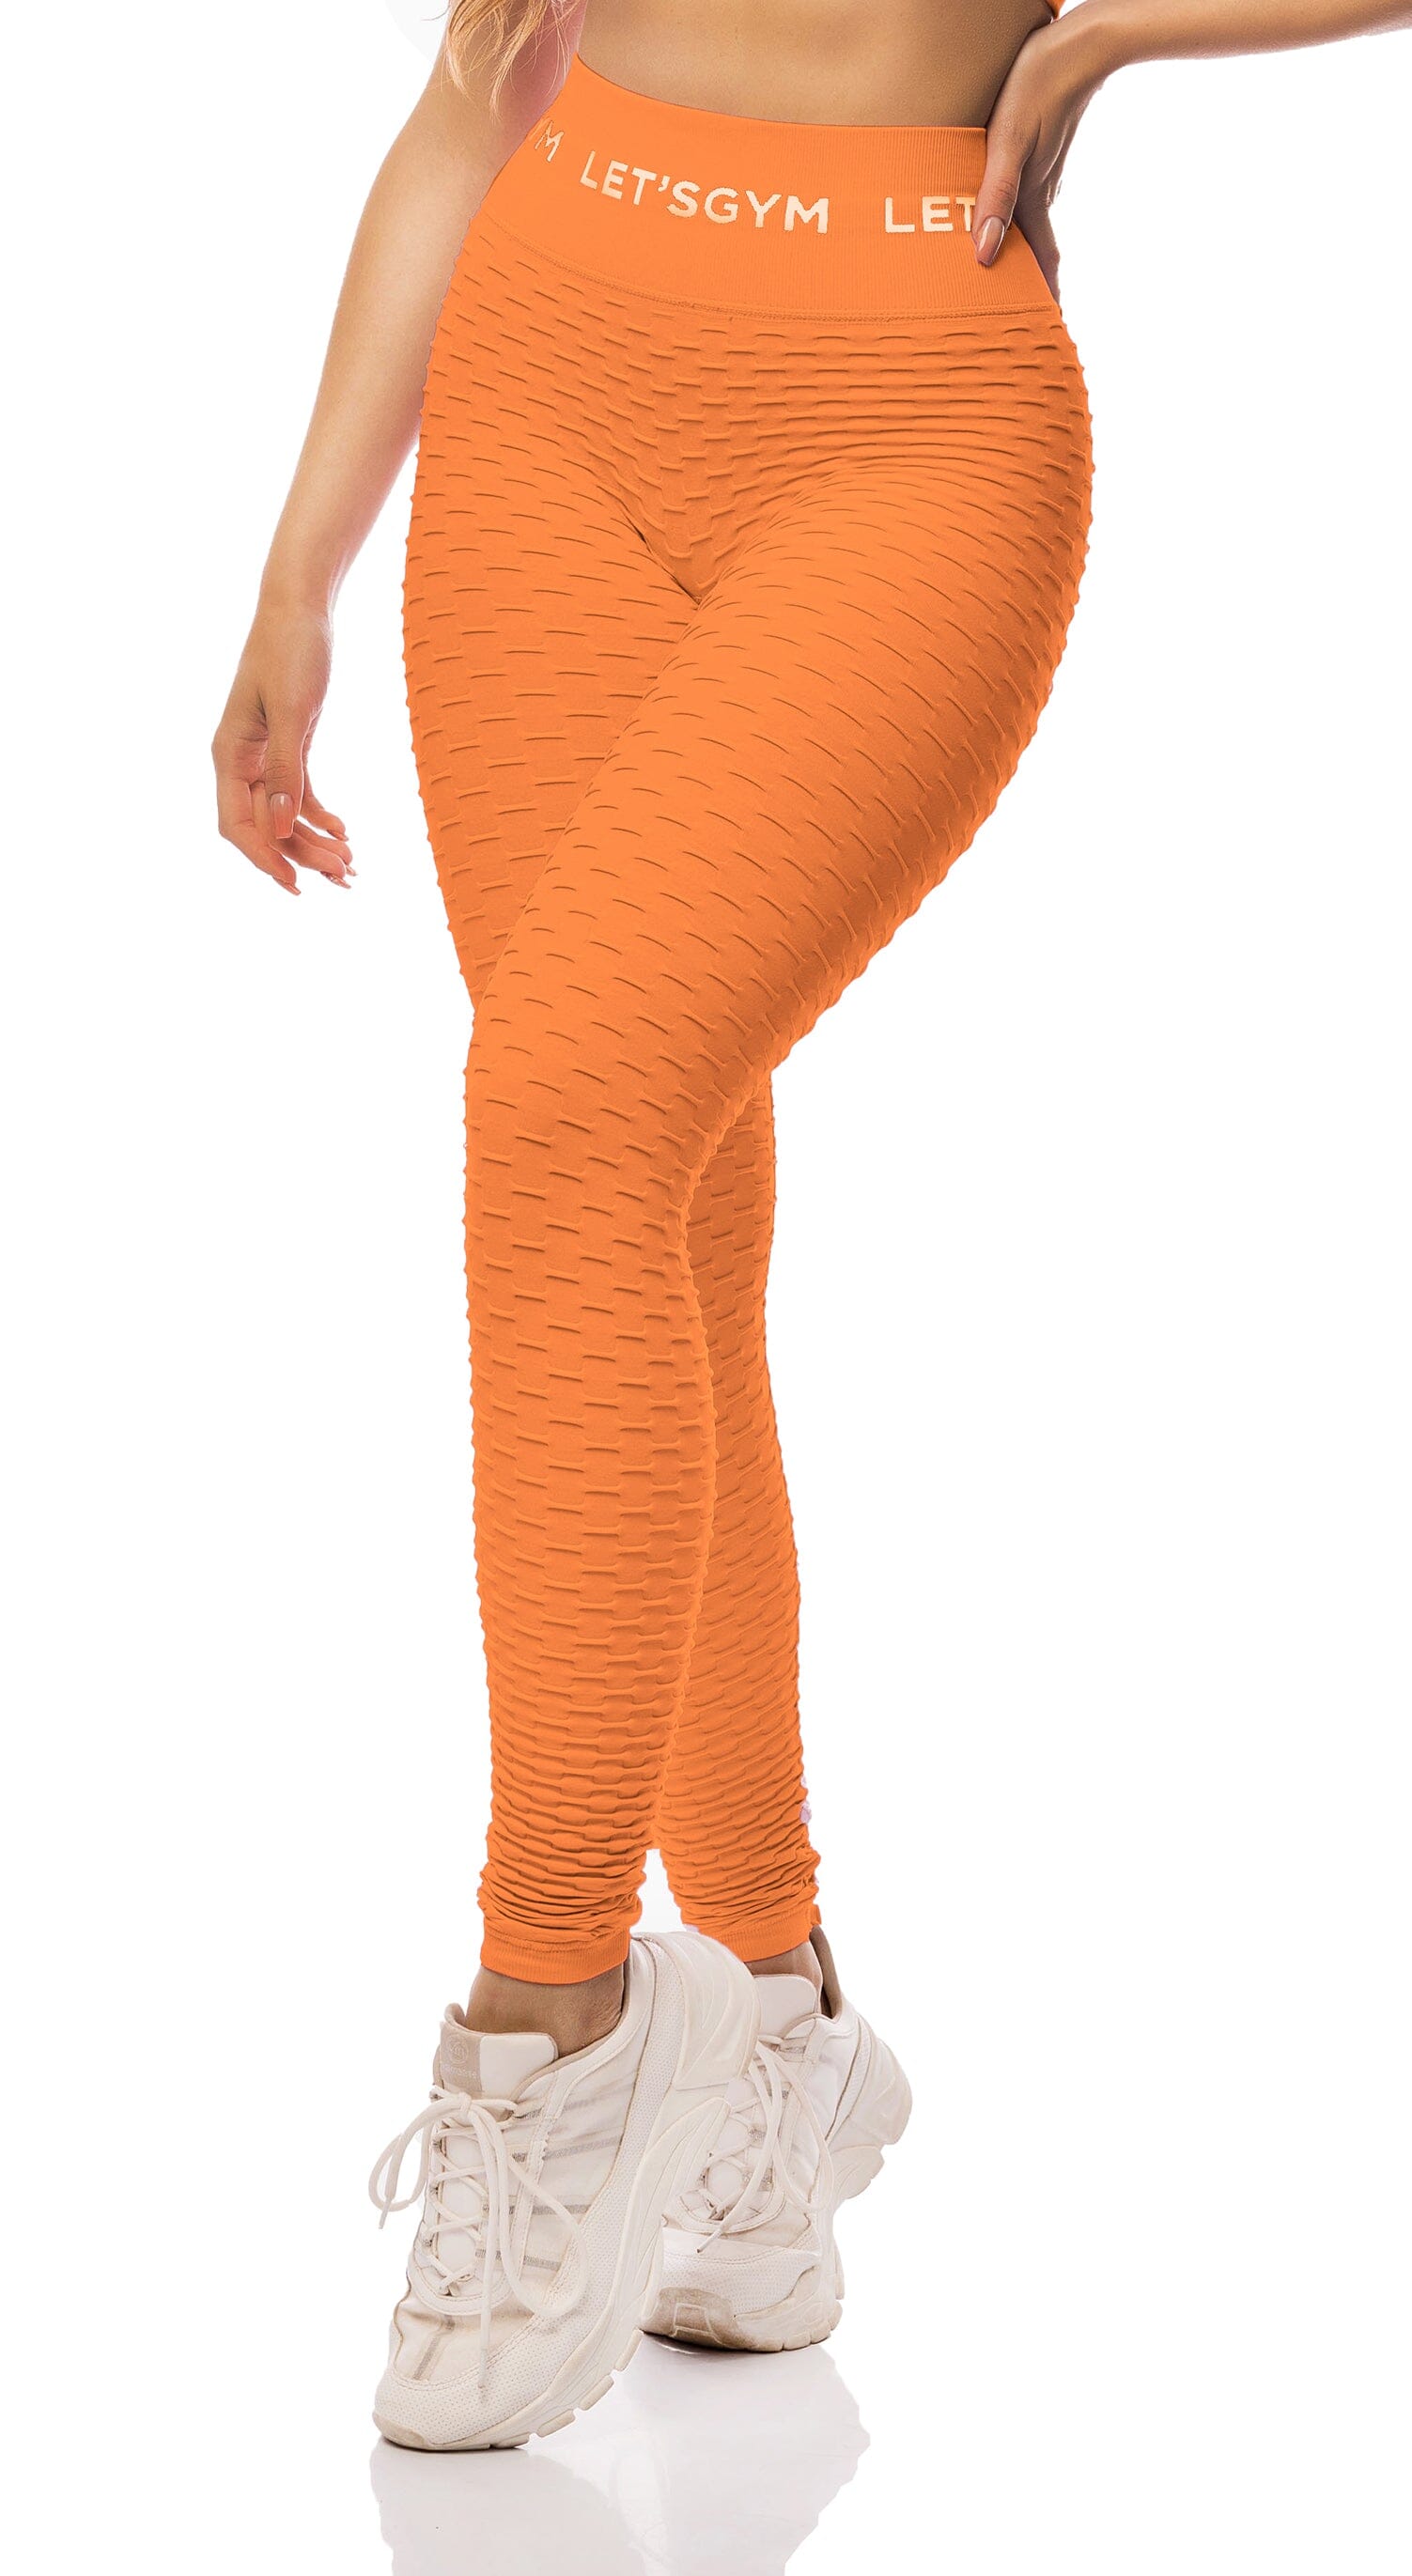 Flawless Seamless Legging - Orange